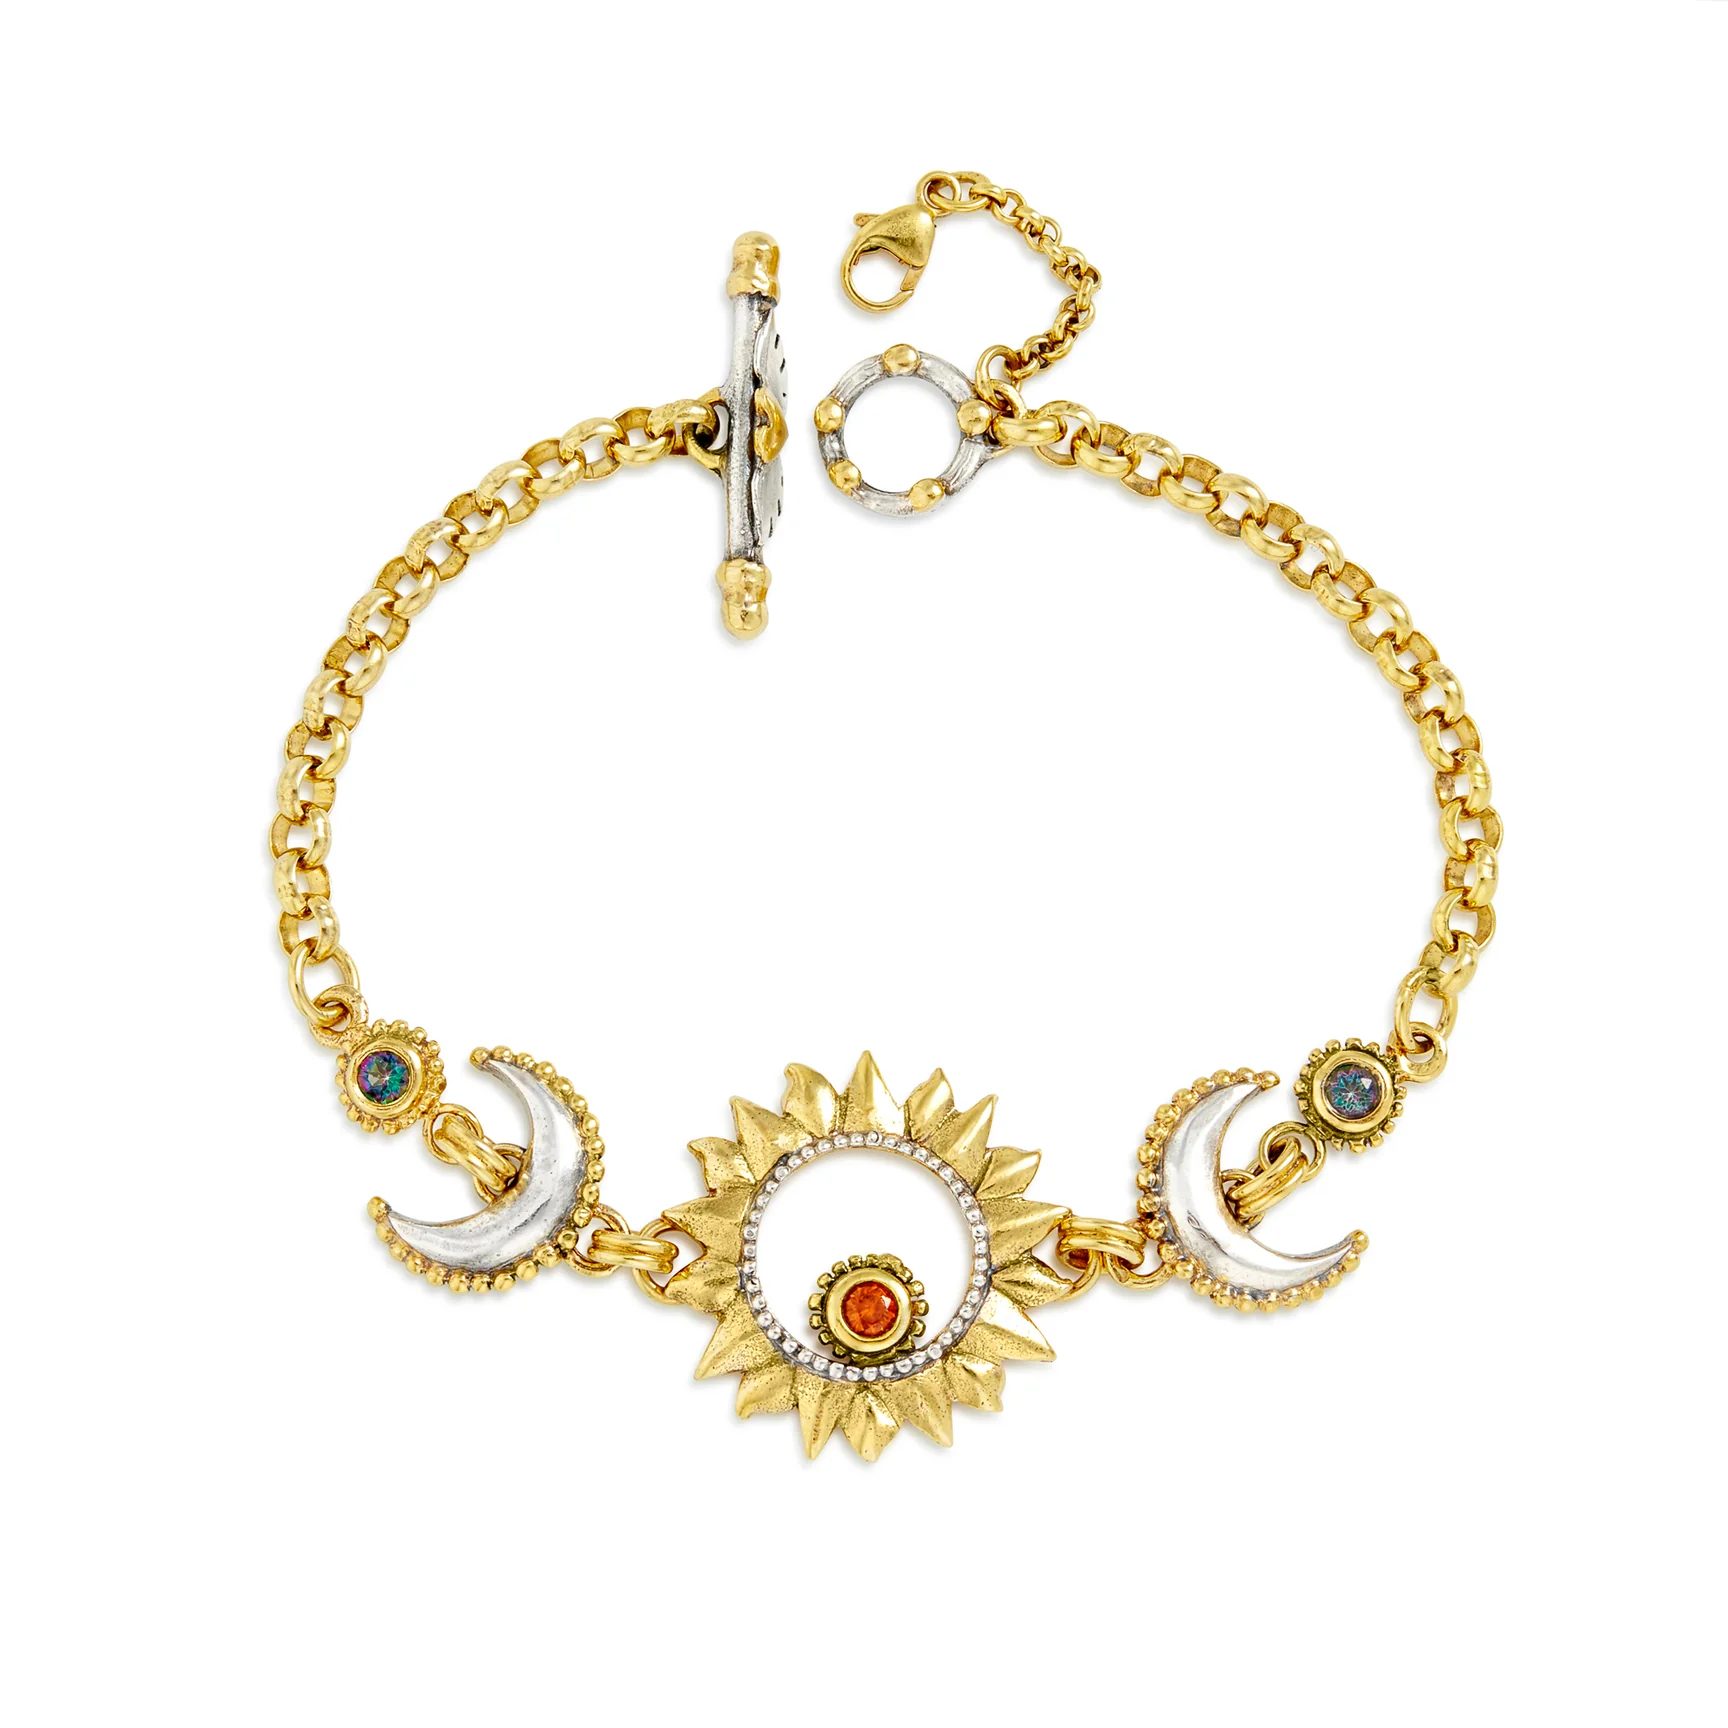 Sirius Bracelet with Mandarin Garnet and Mystic Topaz gemstones in gold plated silver by Sophie Harley London